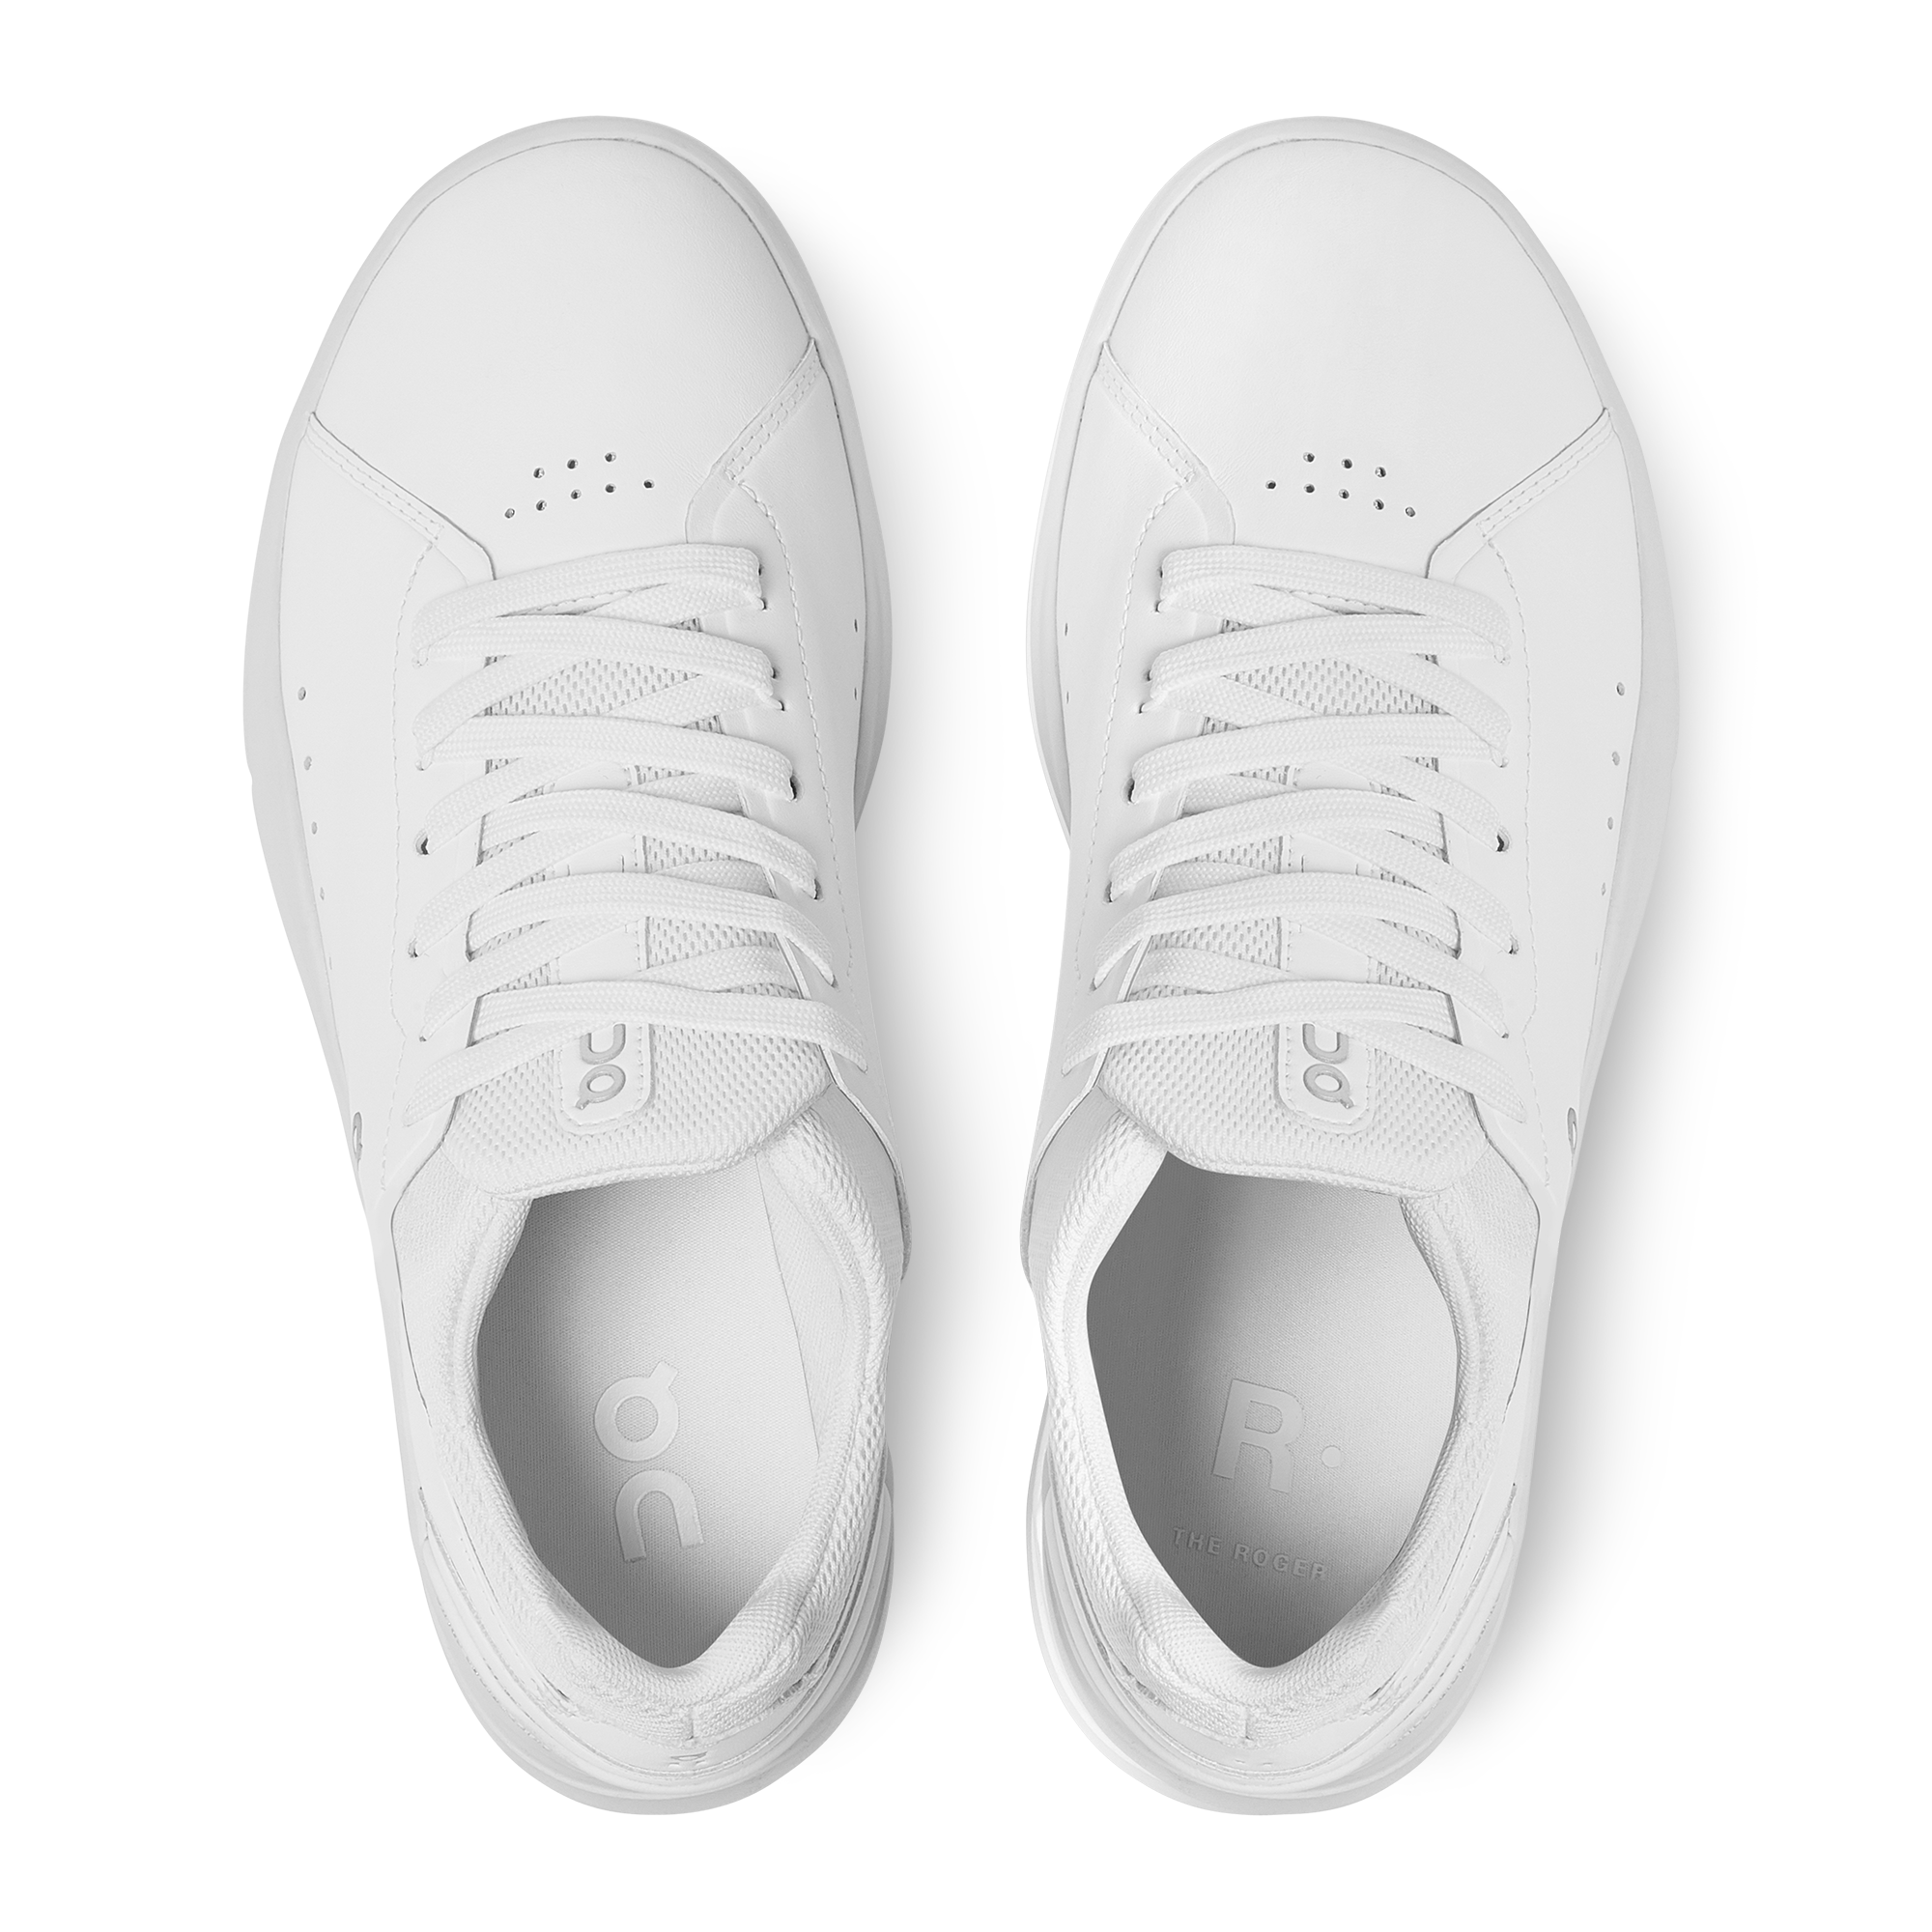 roger advantage women shoe all white on running top